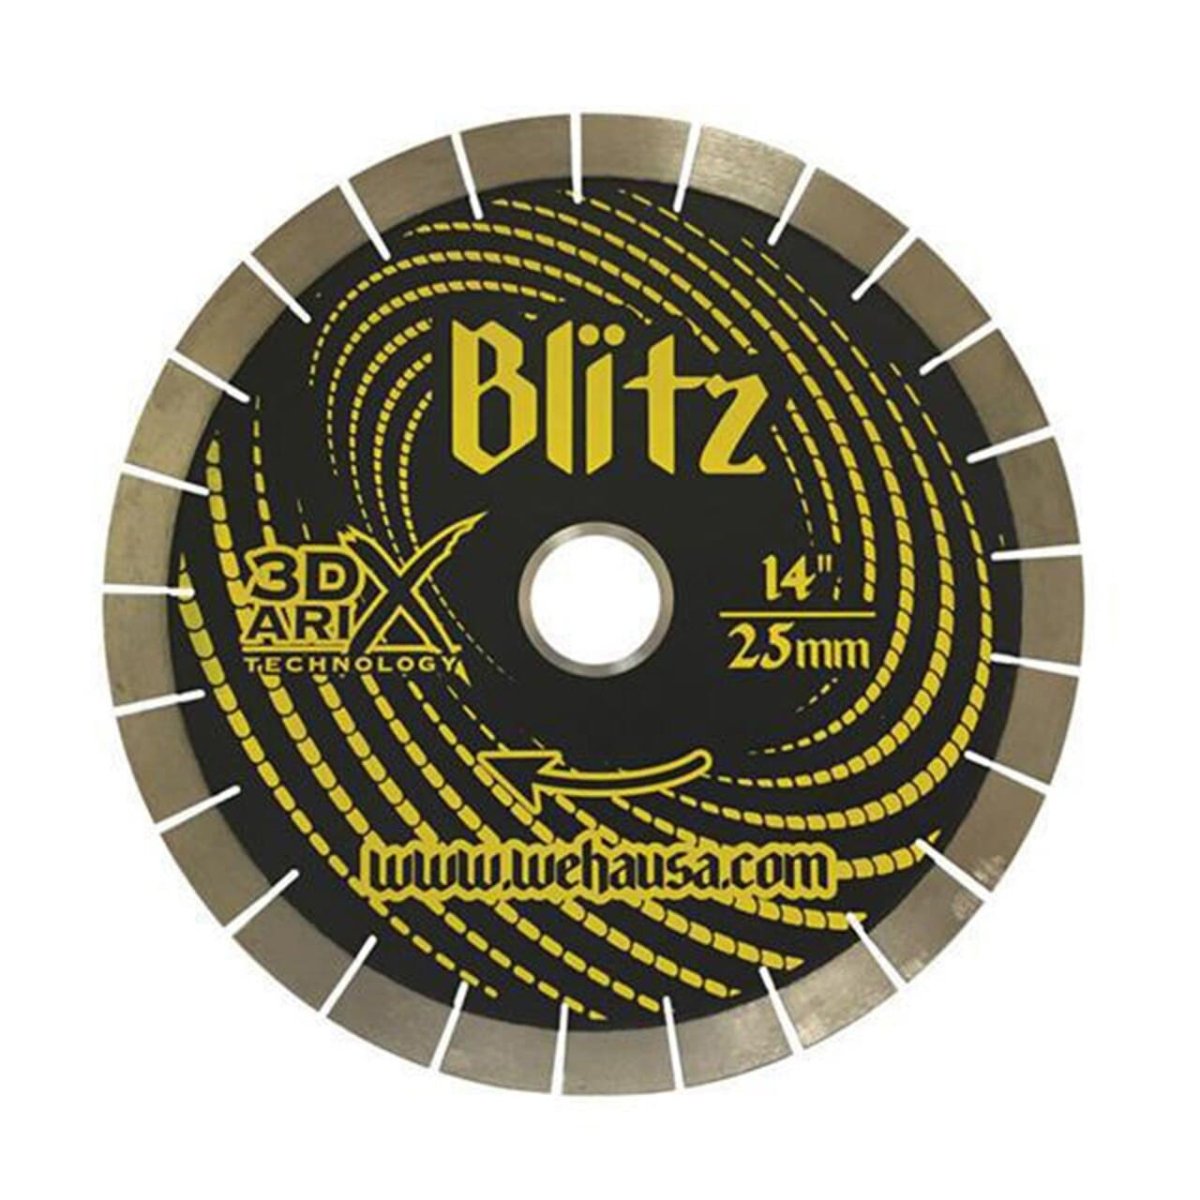 Blitz 14" X 25mm 3DX ARIX Technology Bridge Saw Blade - Diamond Tool Store